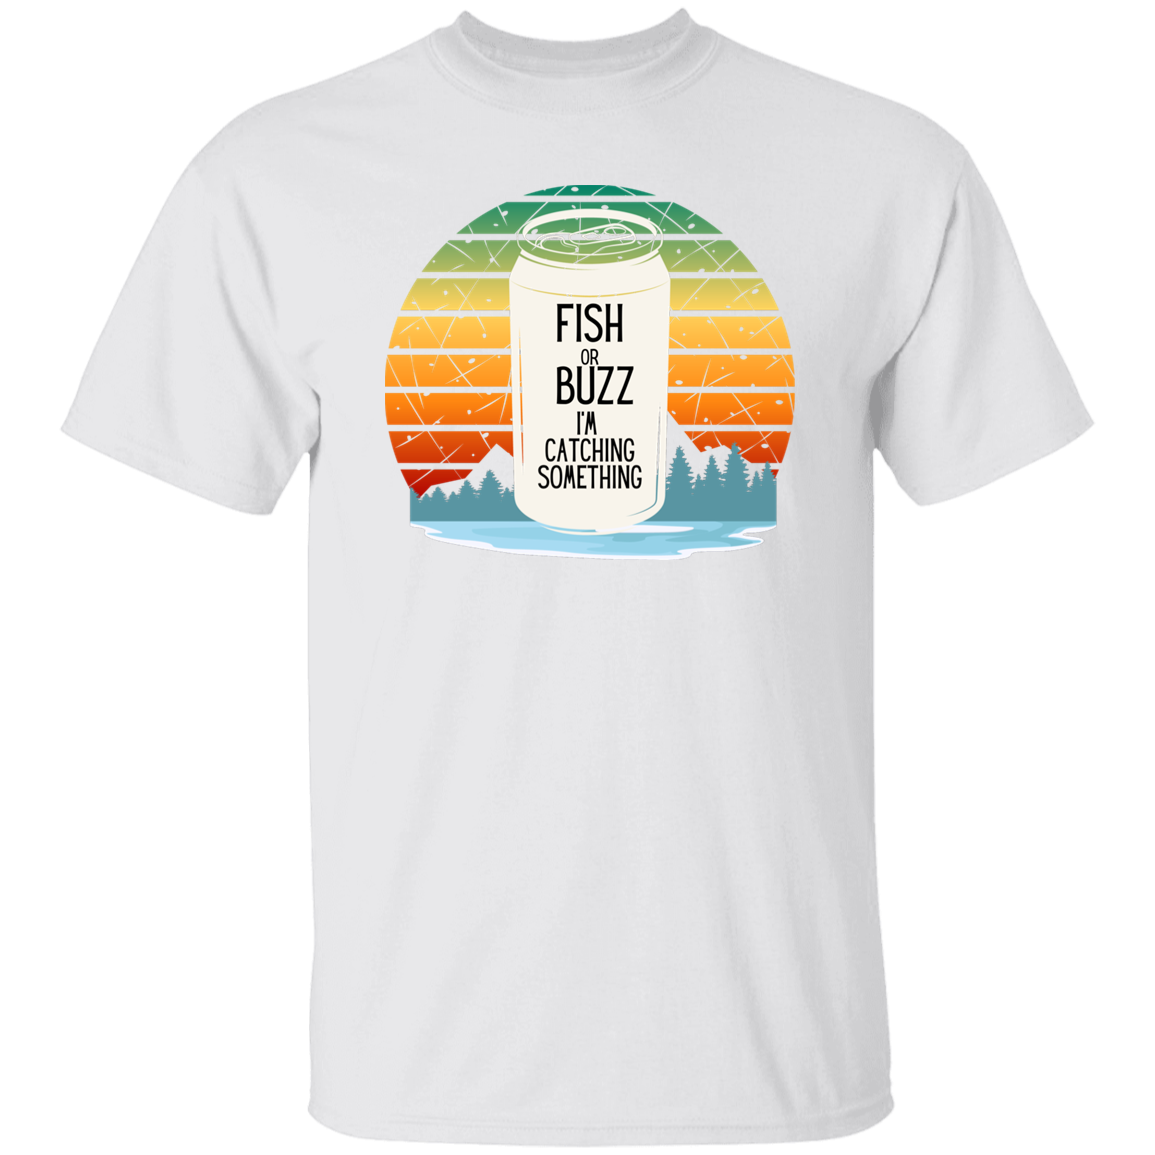 Fish or Buzz T-Shirt